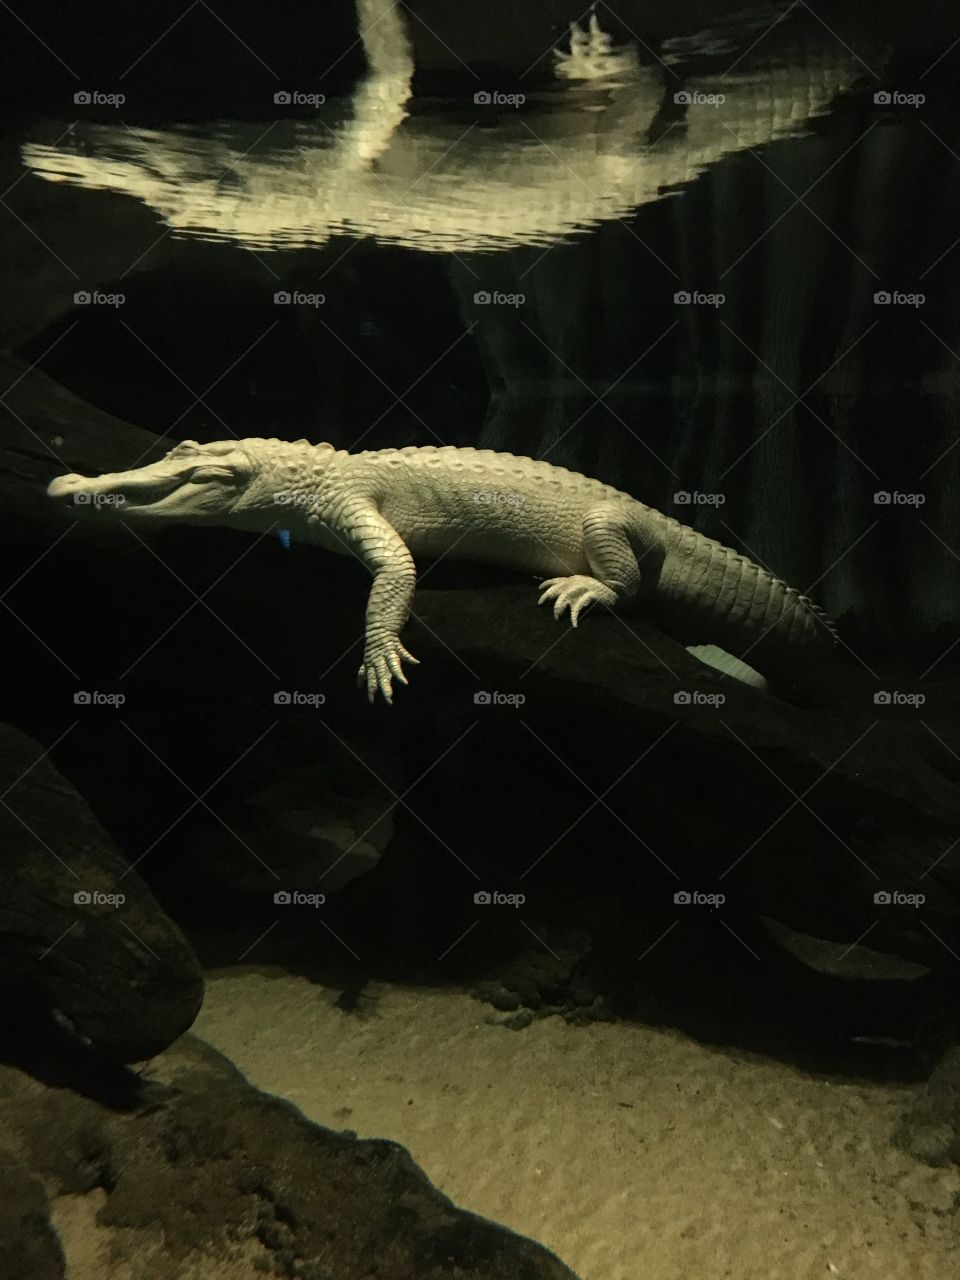 Albino Alligator and Reflection